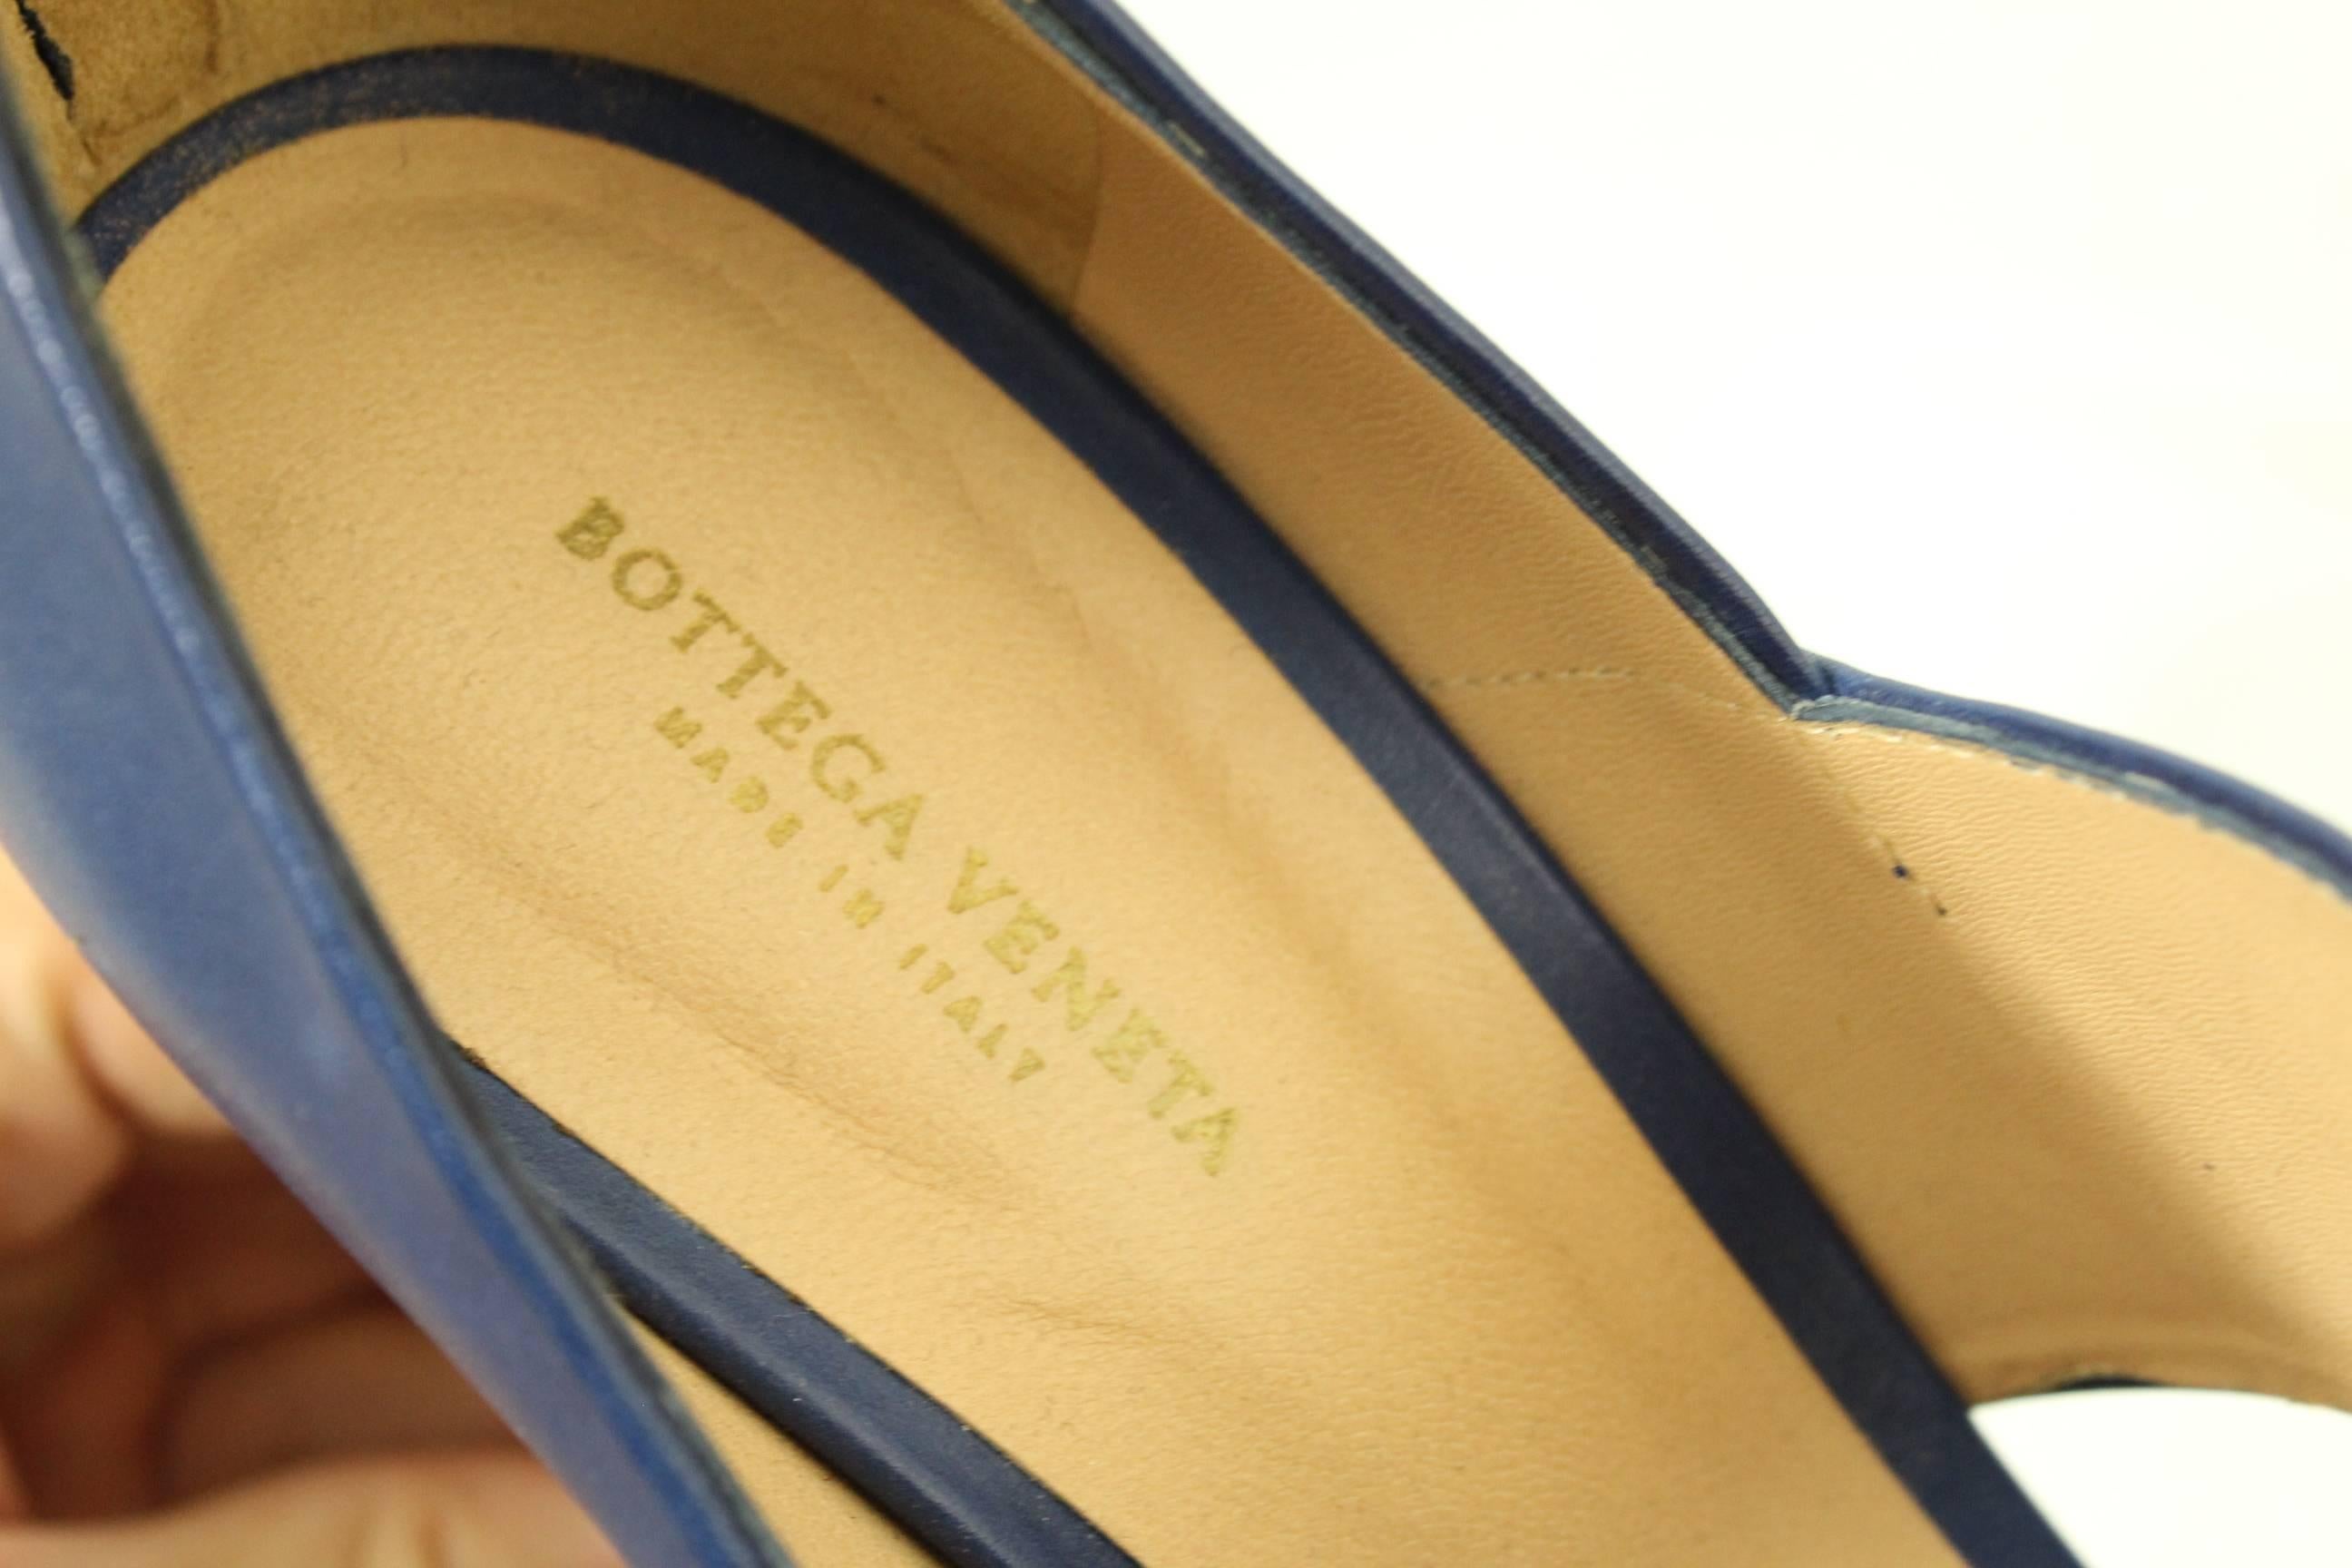 Black Bottega Veneta Leather Hig Heel Shoes. Size 39.5